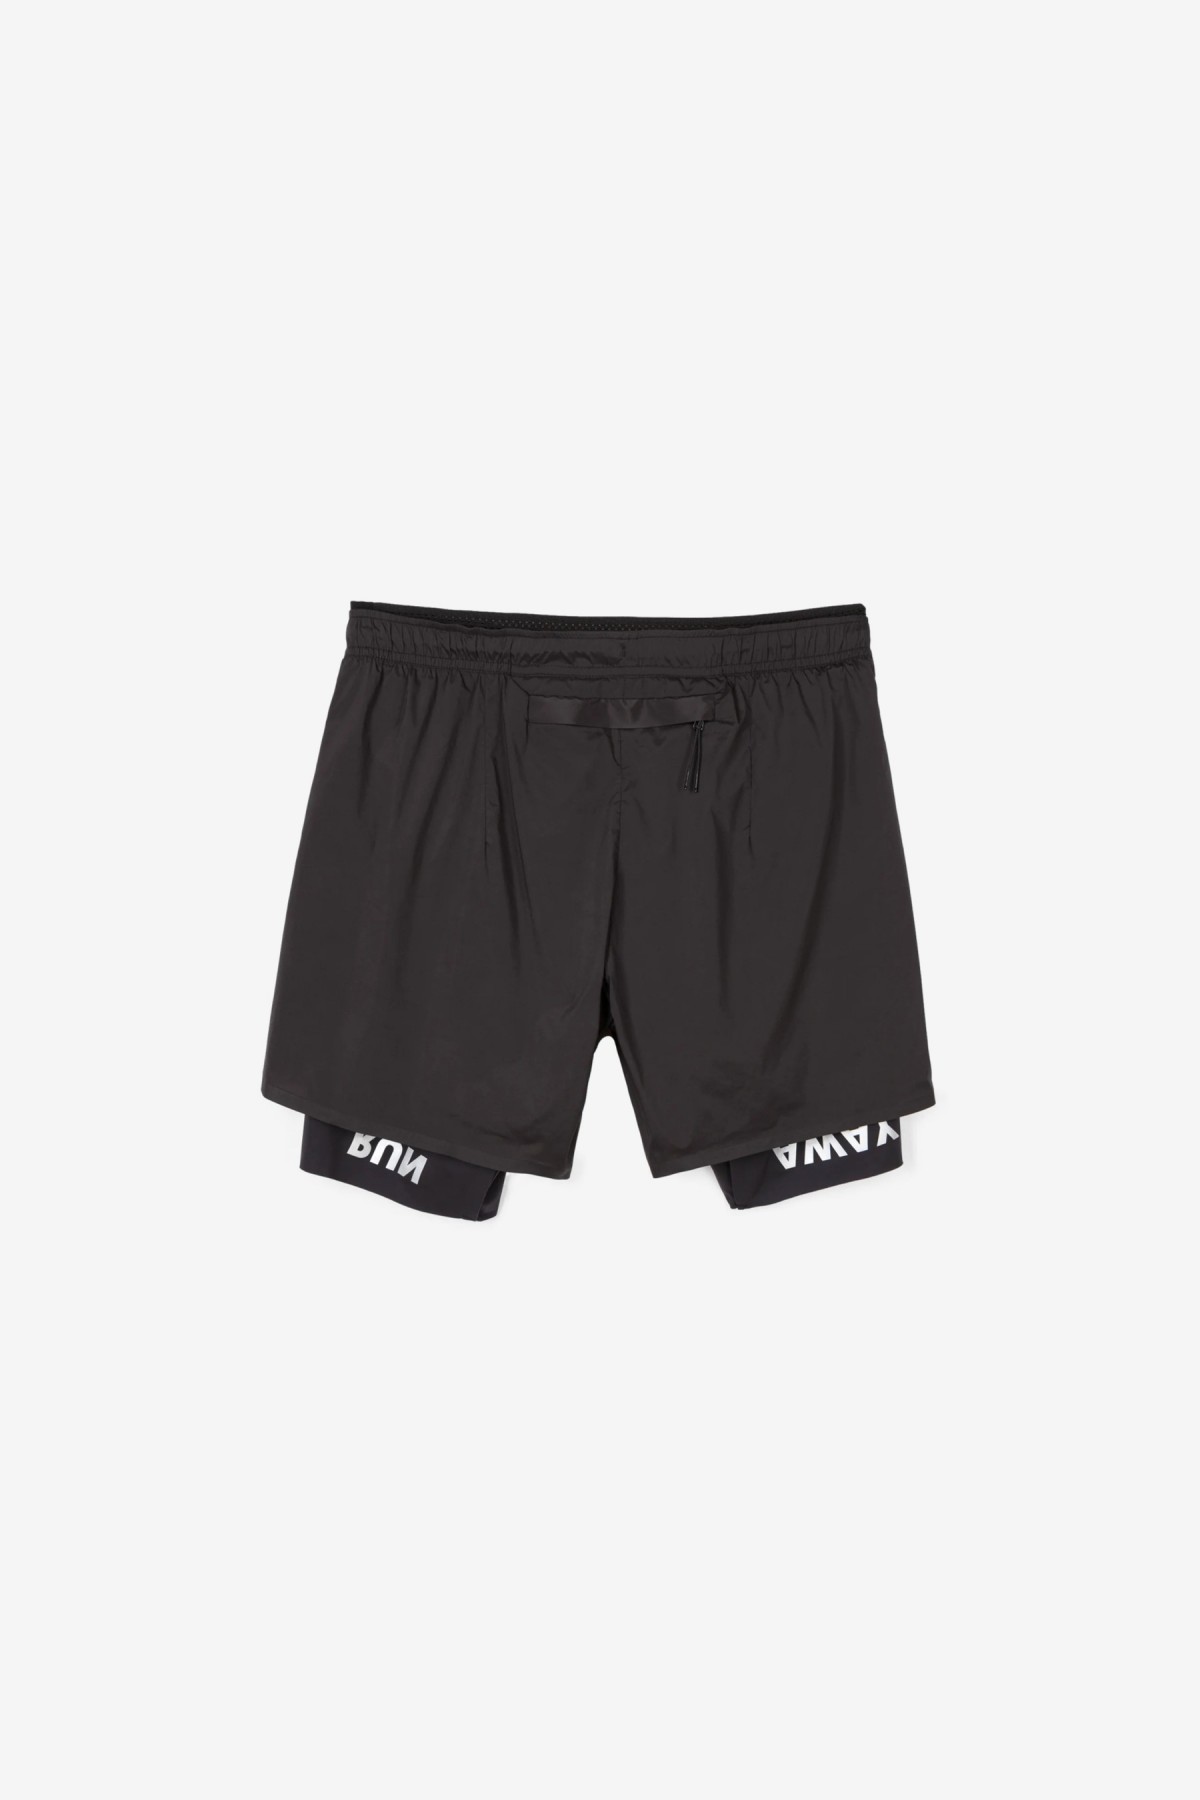 Satisfy Running TechSilk 8" Shorts in Black